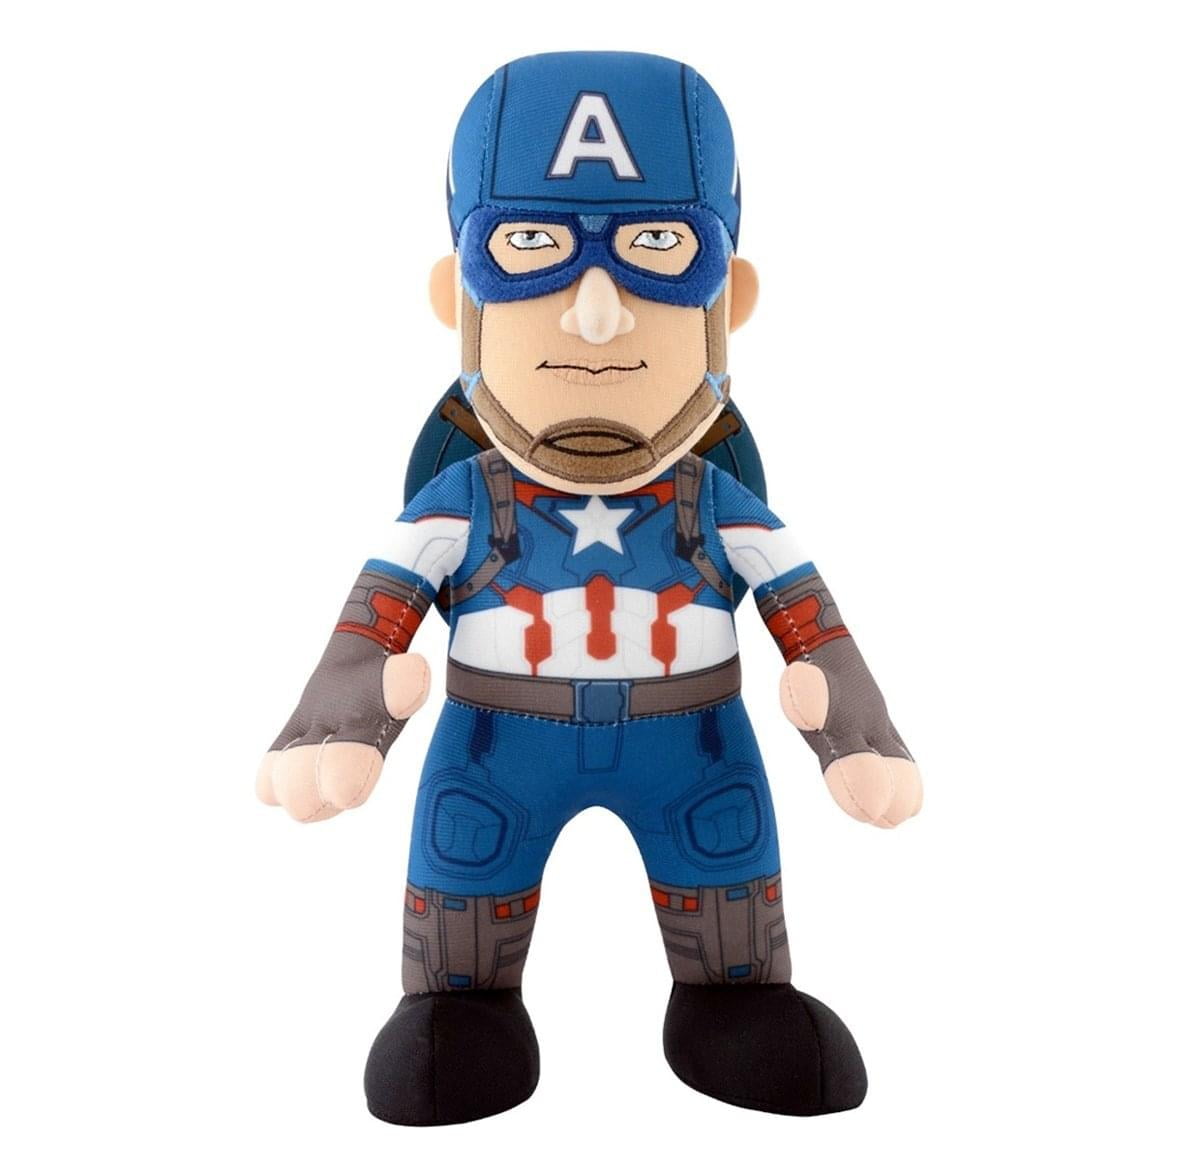 Avengers Character 10" Iron Man Captain America Batman Plush Toy Soft Cute Doll 